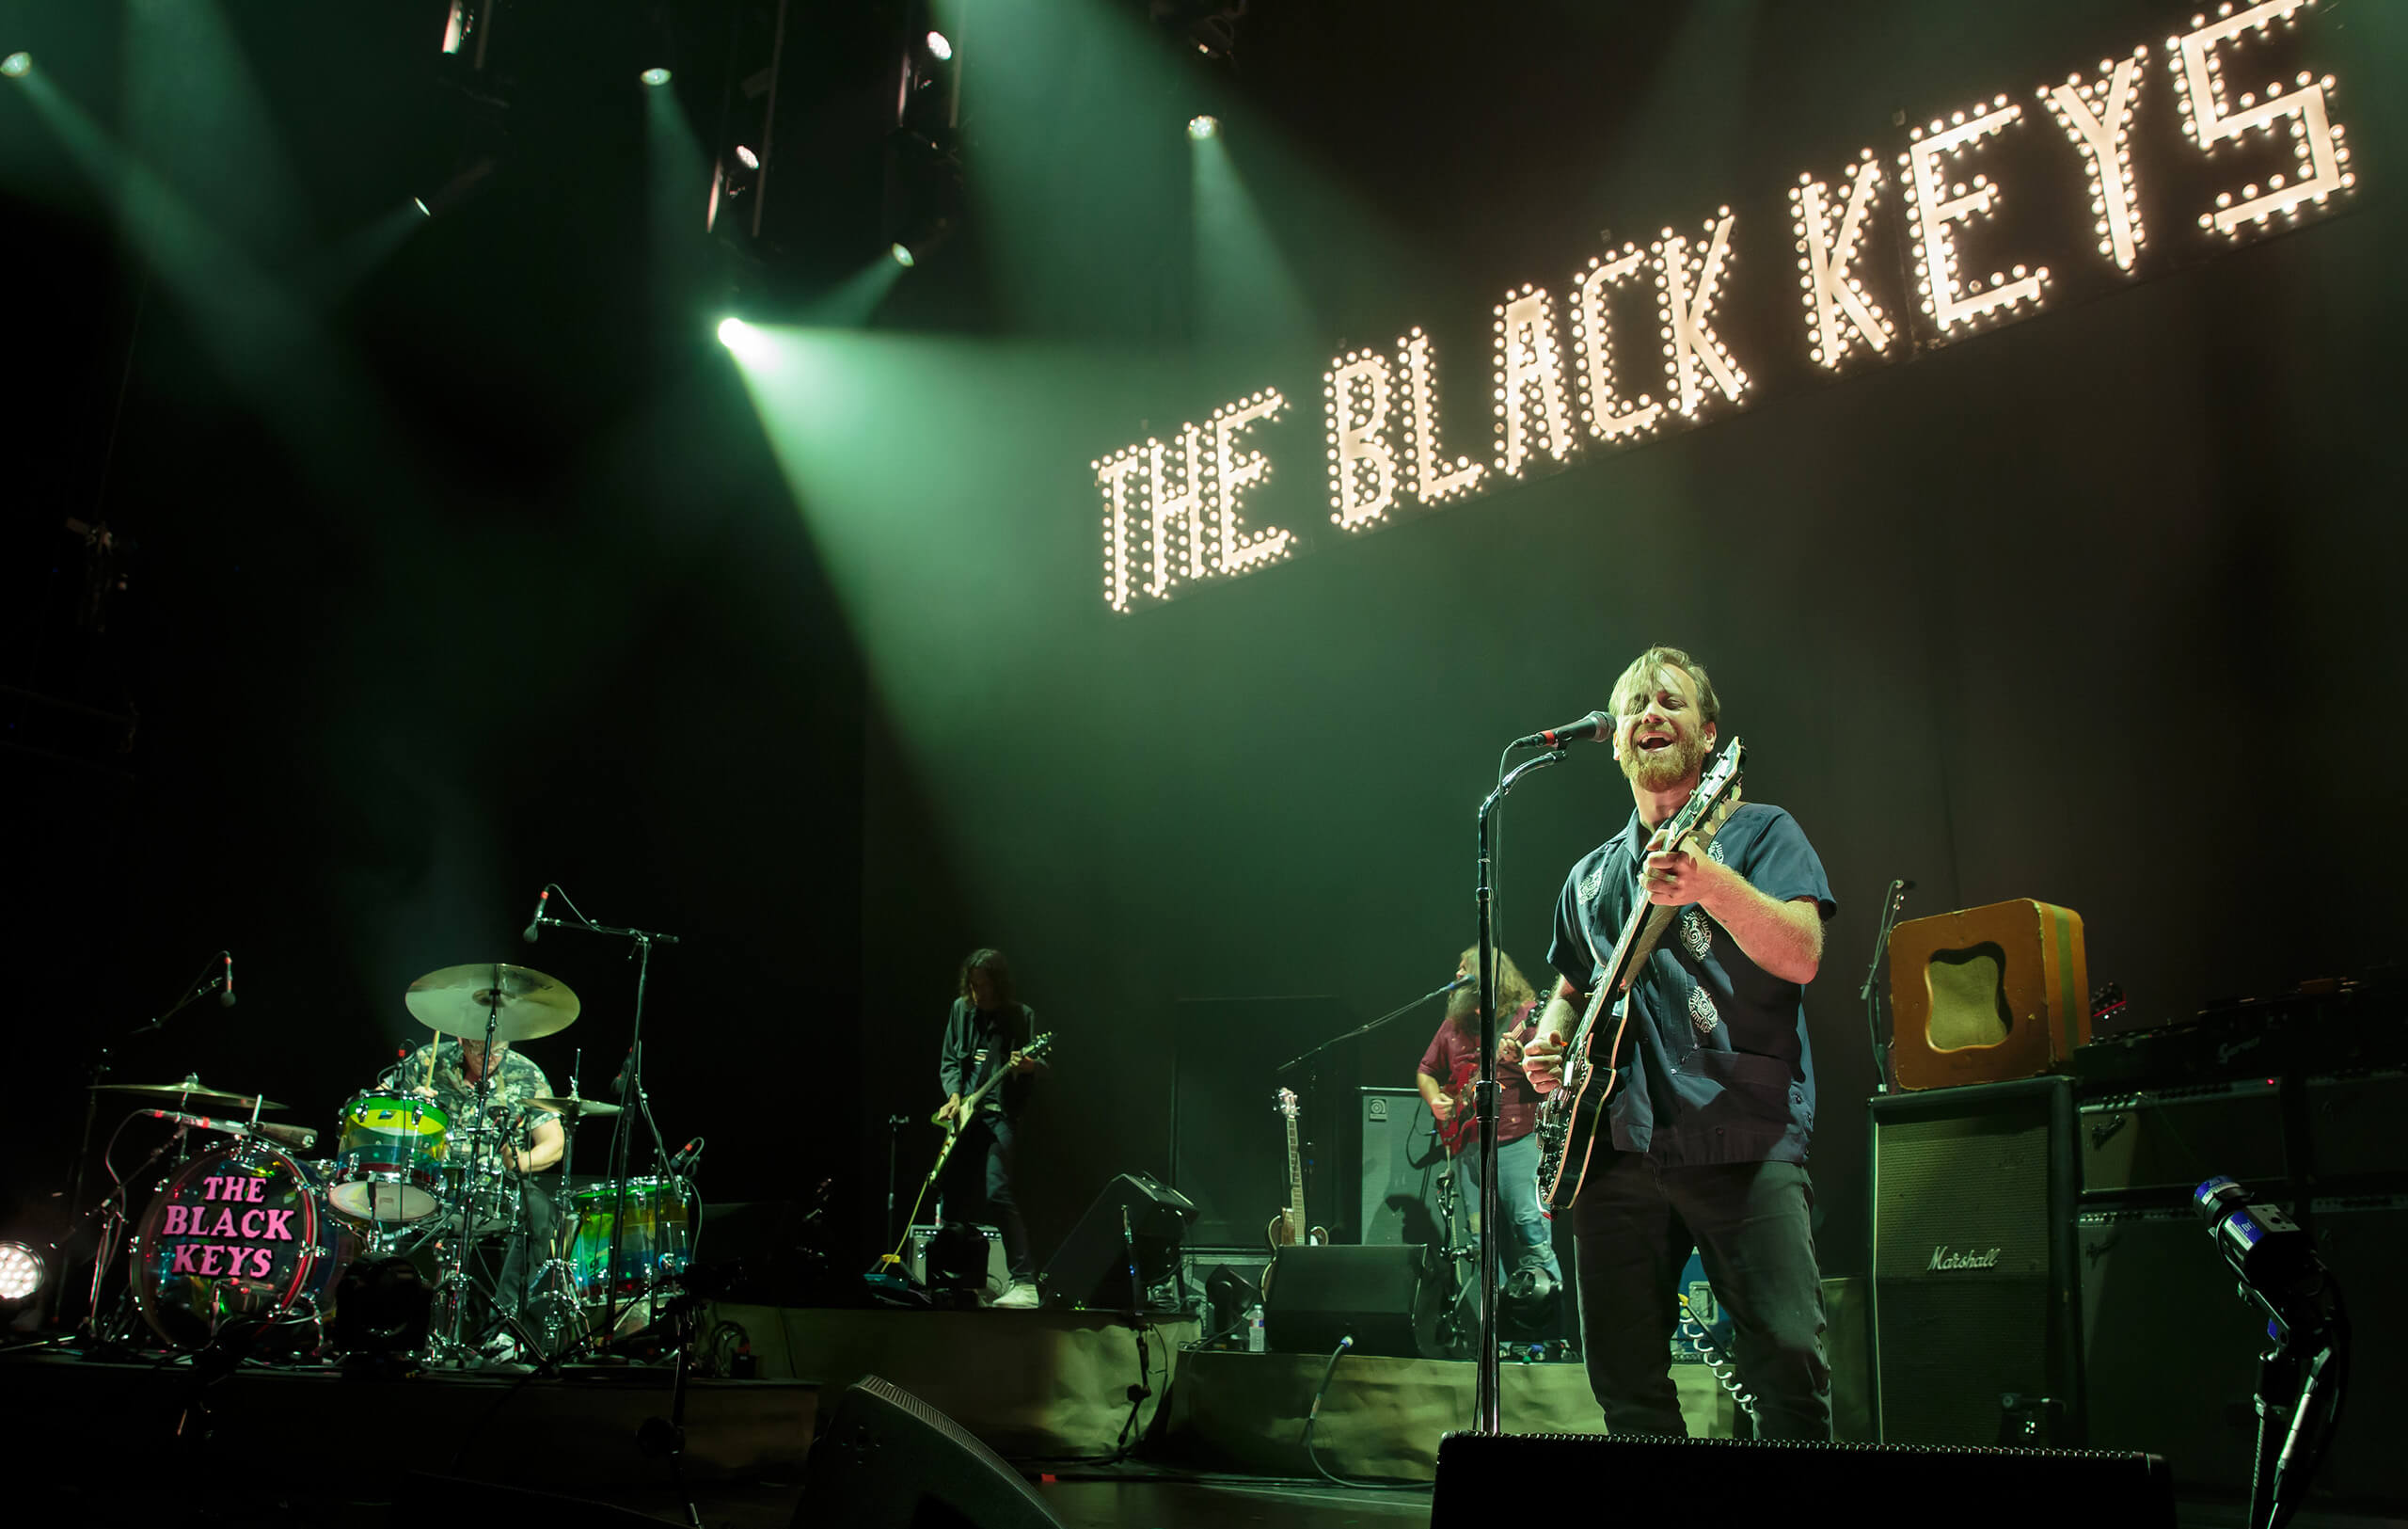 Patrick Carney and Dan Auerbach of The Black Keys perform at Sprint Center on September 24, 2019 in Kansas City, Missouri.